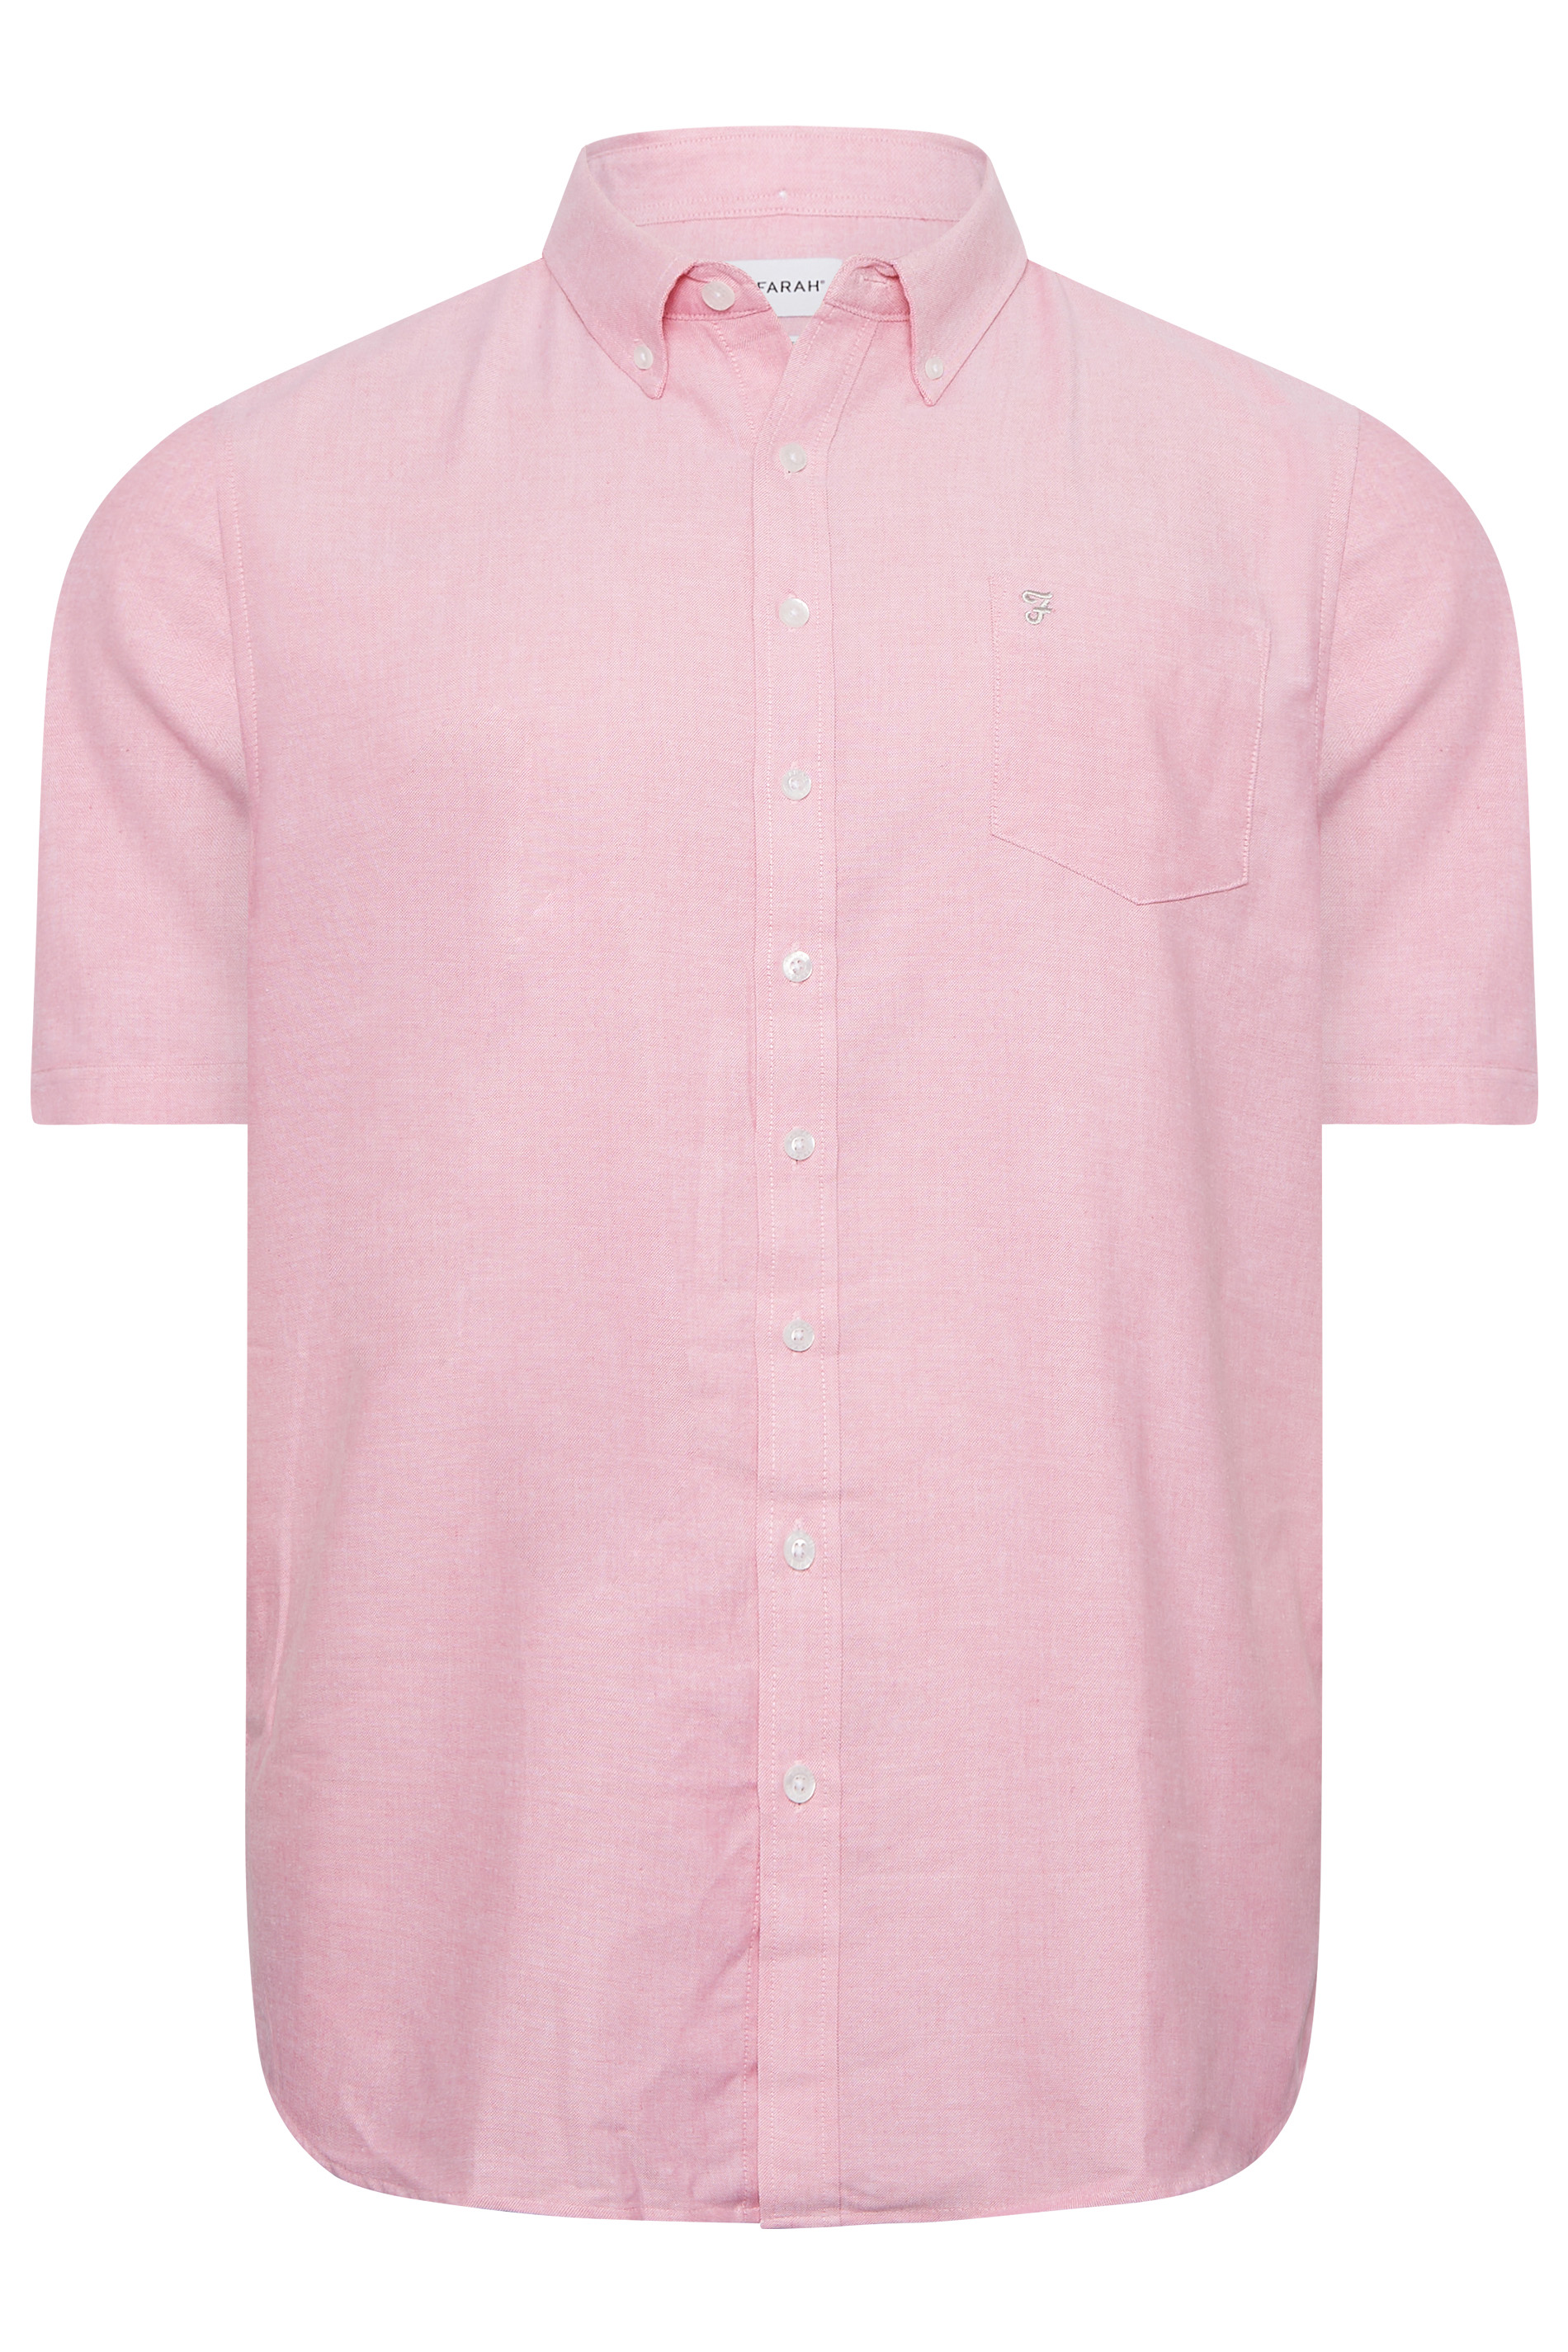 FARAH Big & Tall Pink Short Sleeve Shirt | BadRhino 3